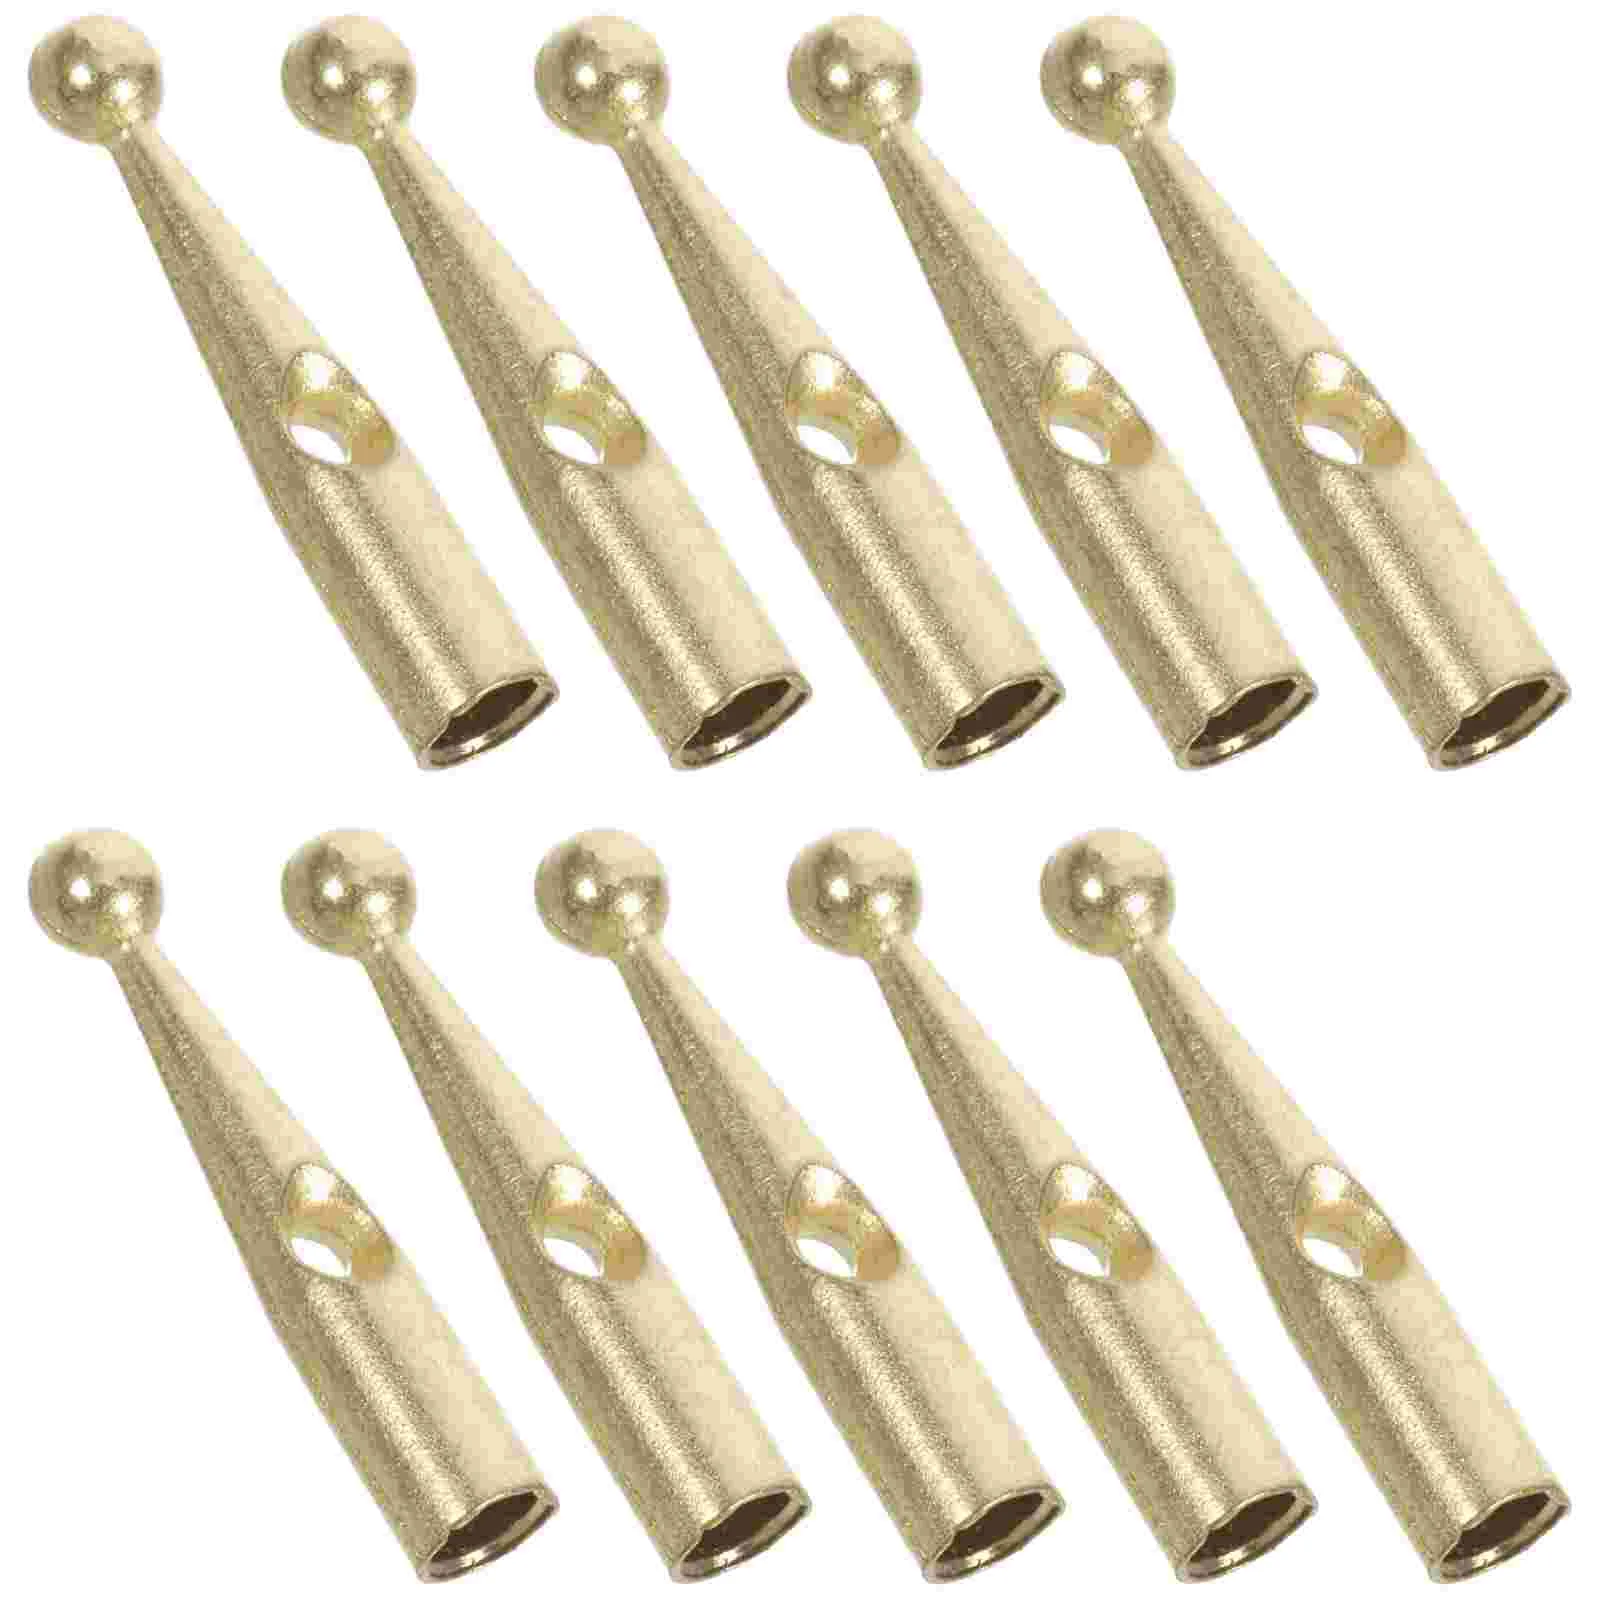 

10 Pcs Umbrella Tail Beads Folding Repair Accessories Convenient Small Metal Repairing Rain Bone Covers